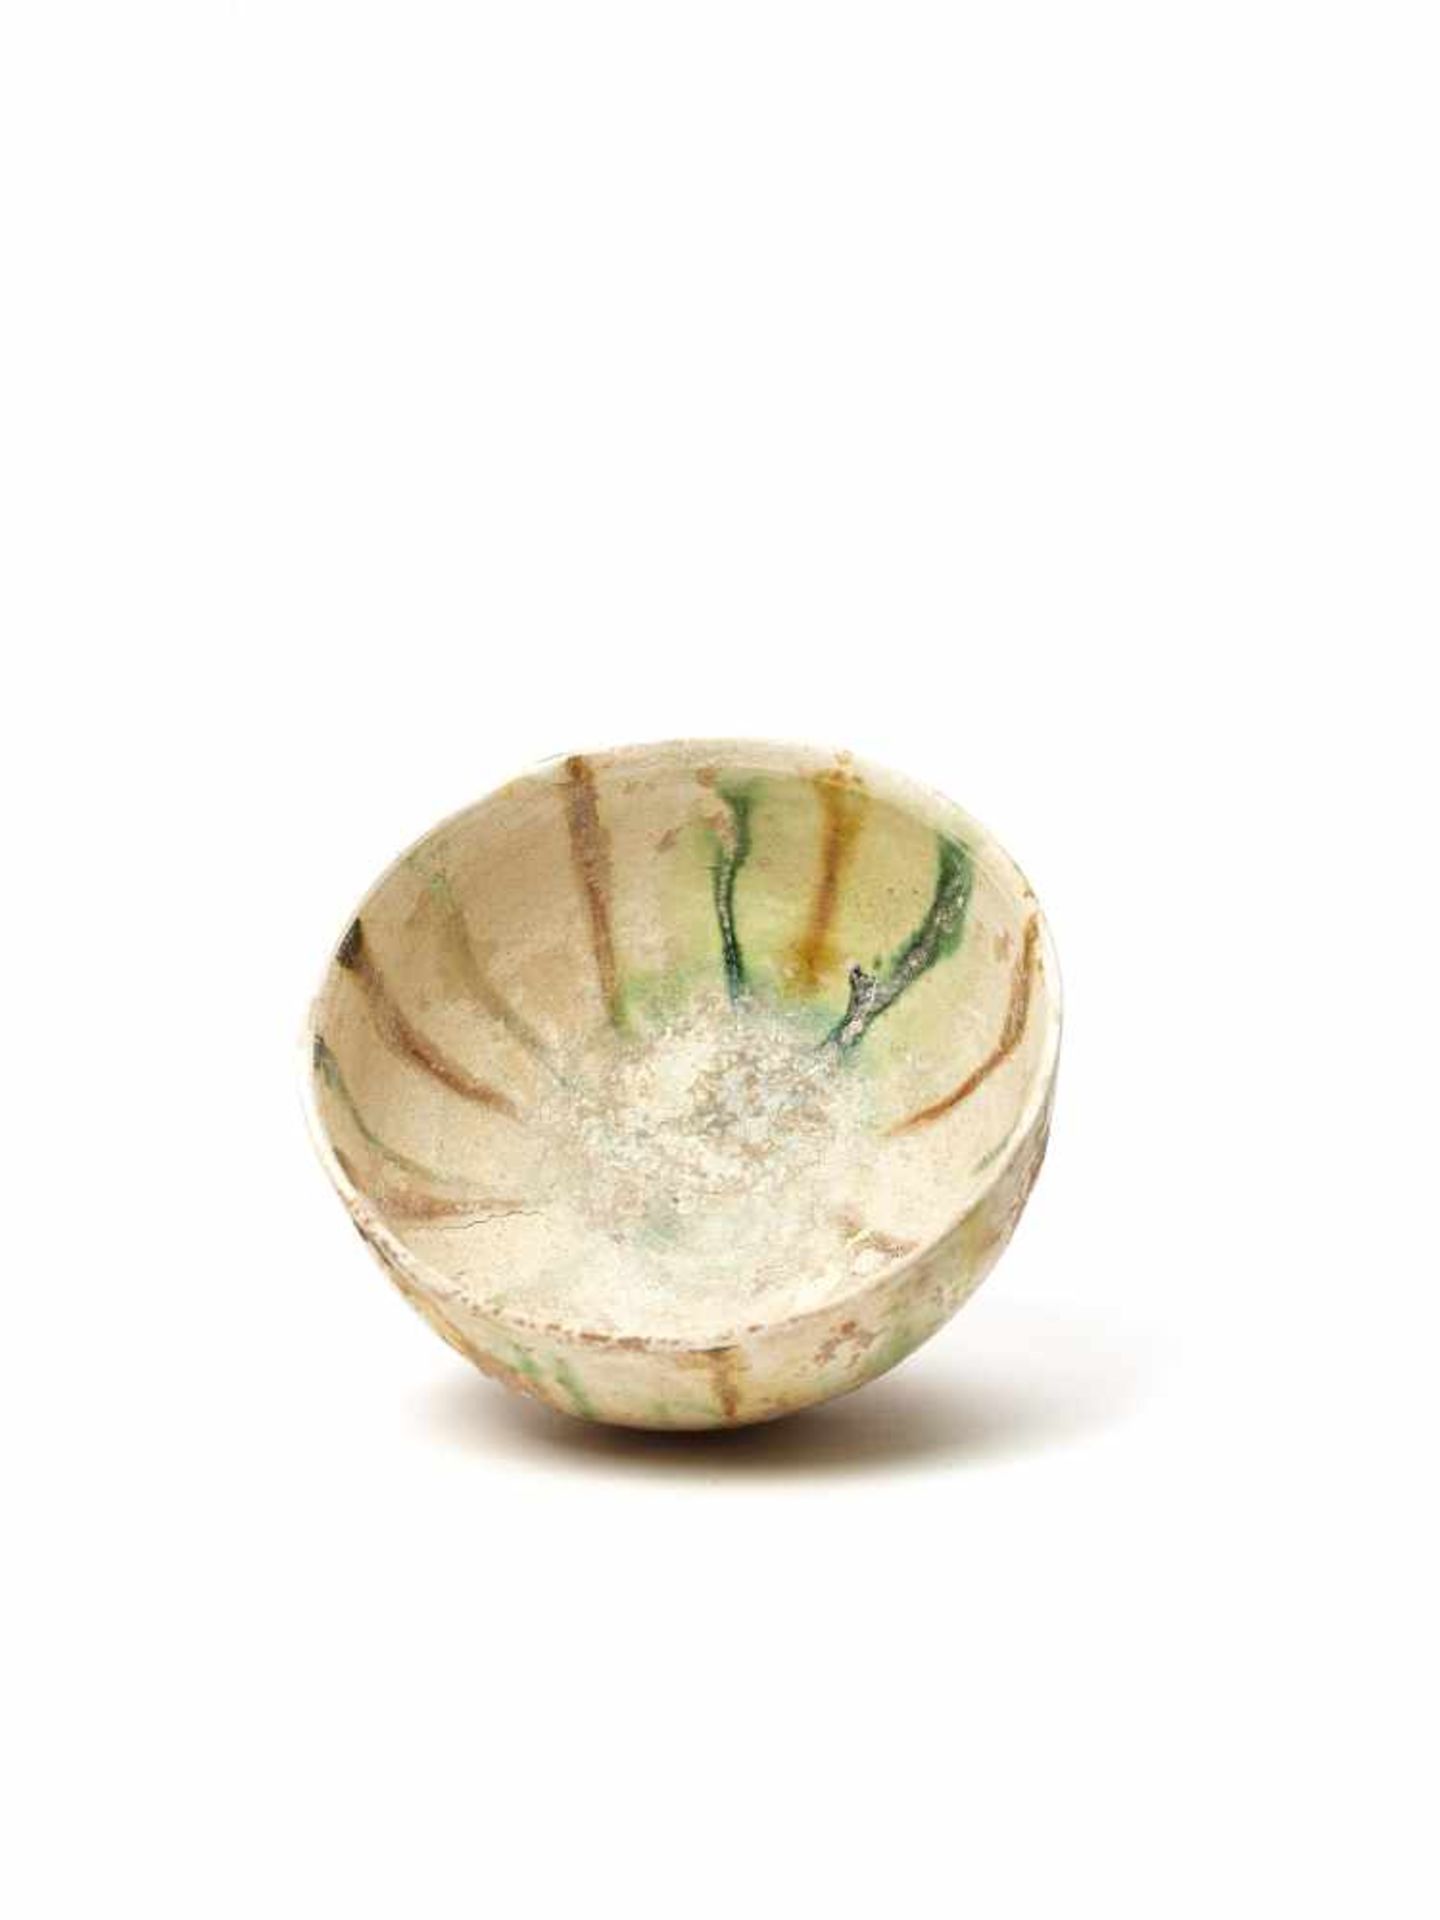 A RARE SANCAI ‘LACRIMA’ BOWL, TANG DYNASTYThe bowl with an unusual multicolored ‘tears’ glaze, - Image 3 of 4